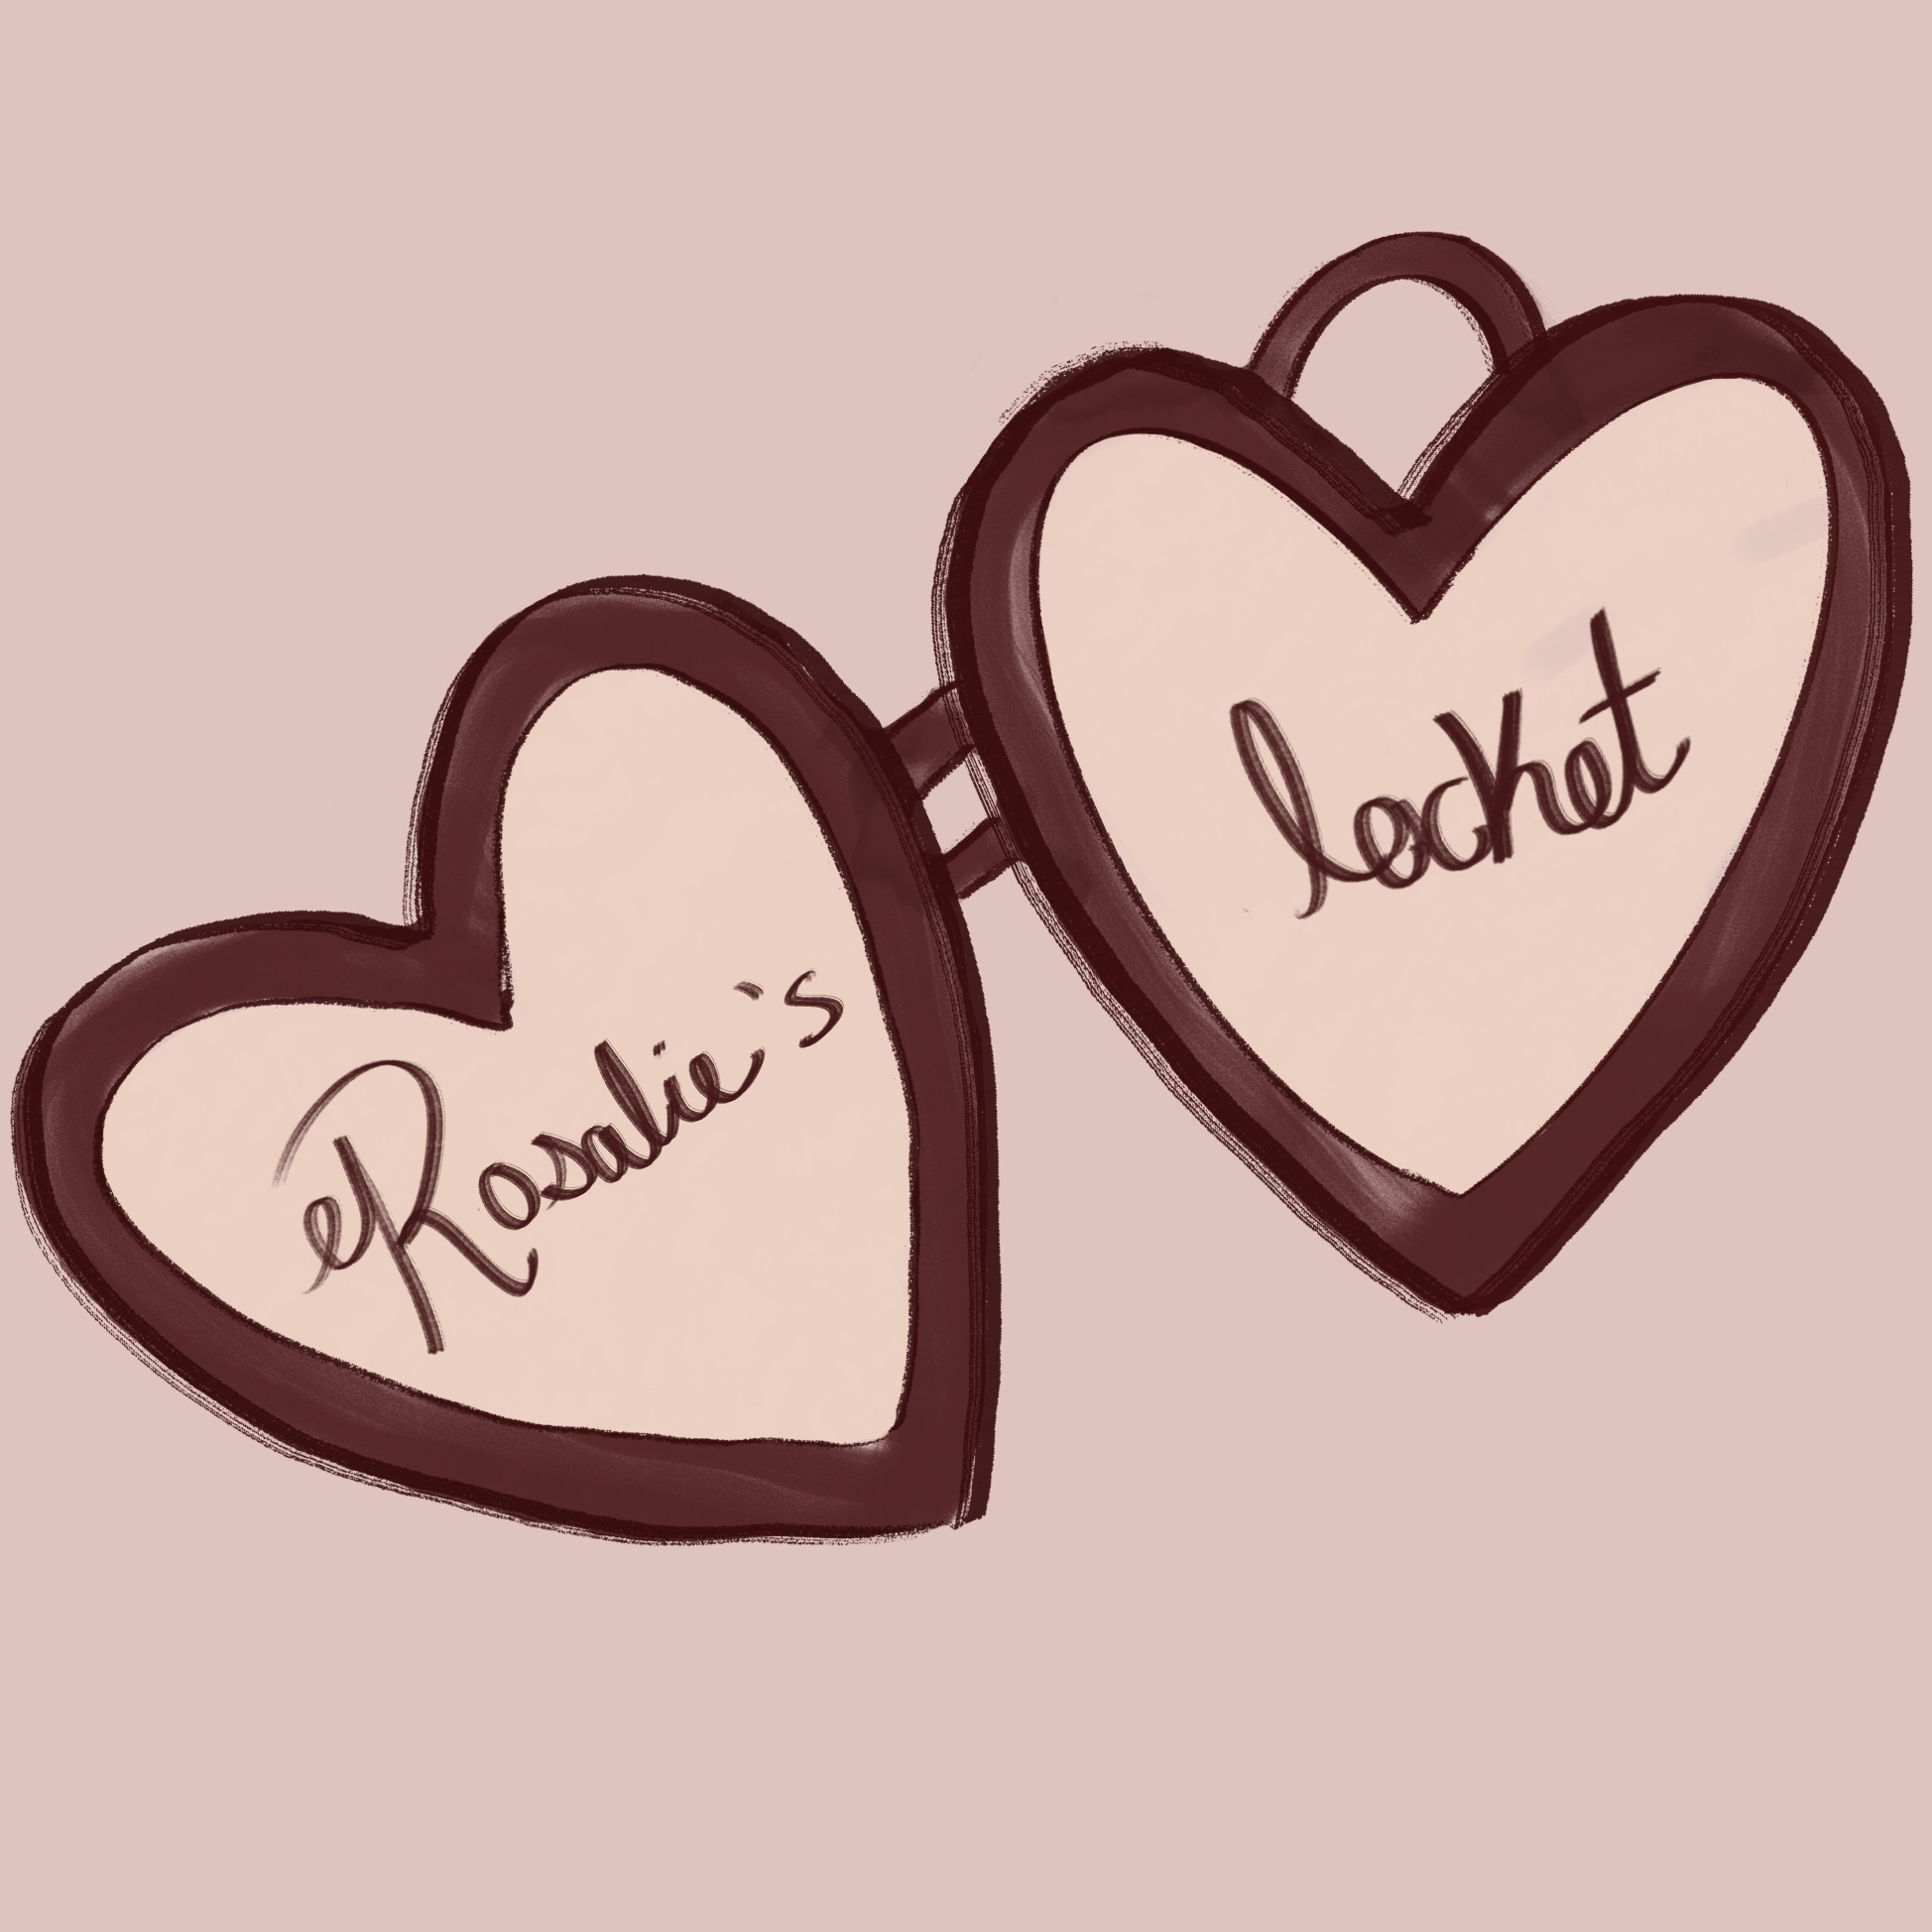 Rosalies-Locket